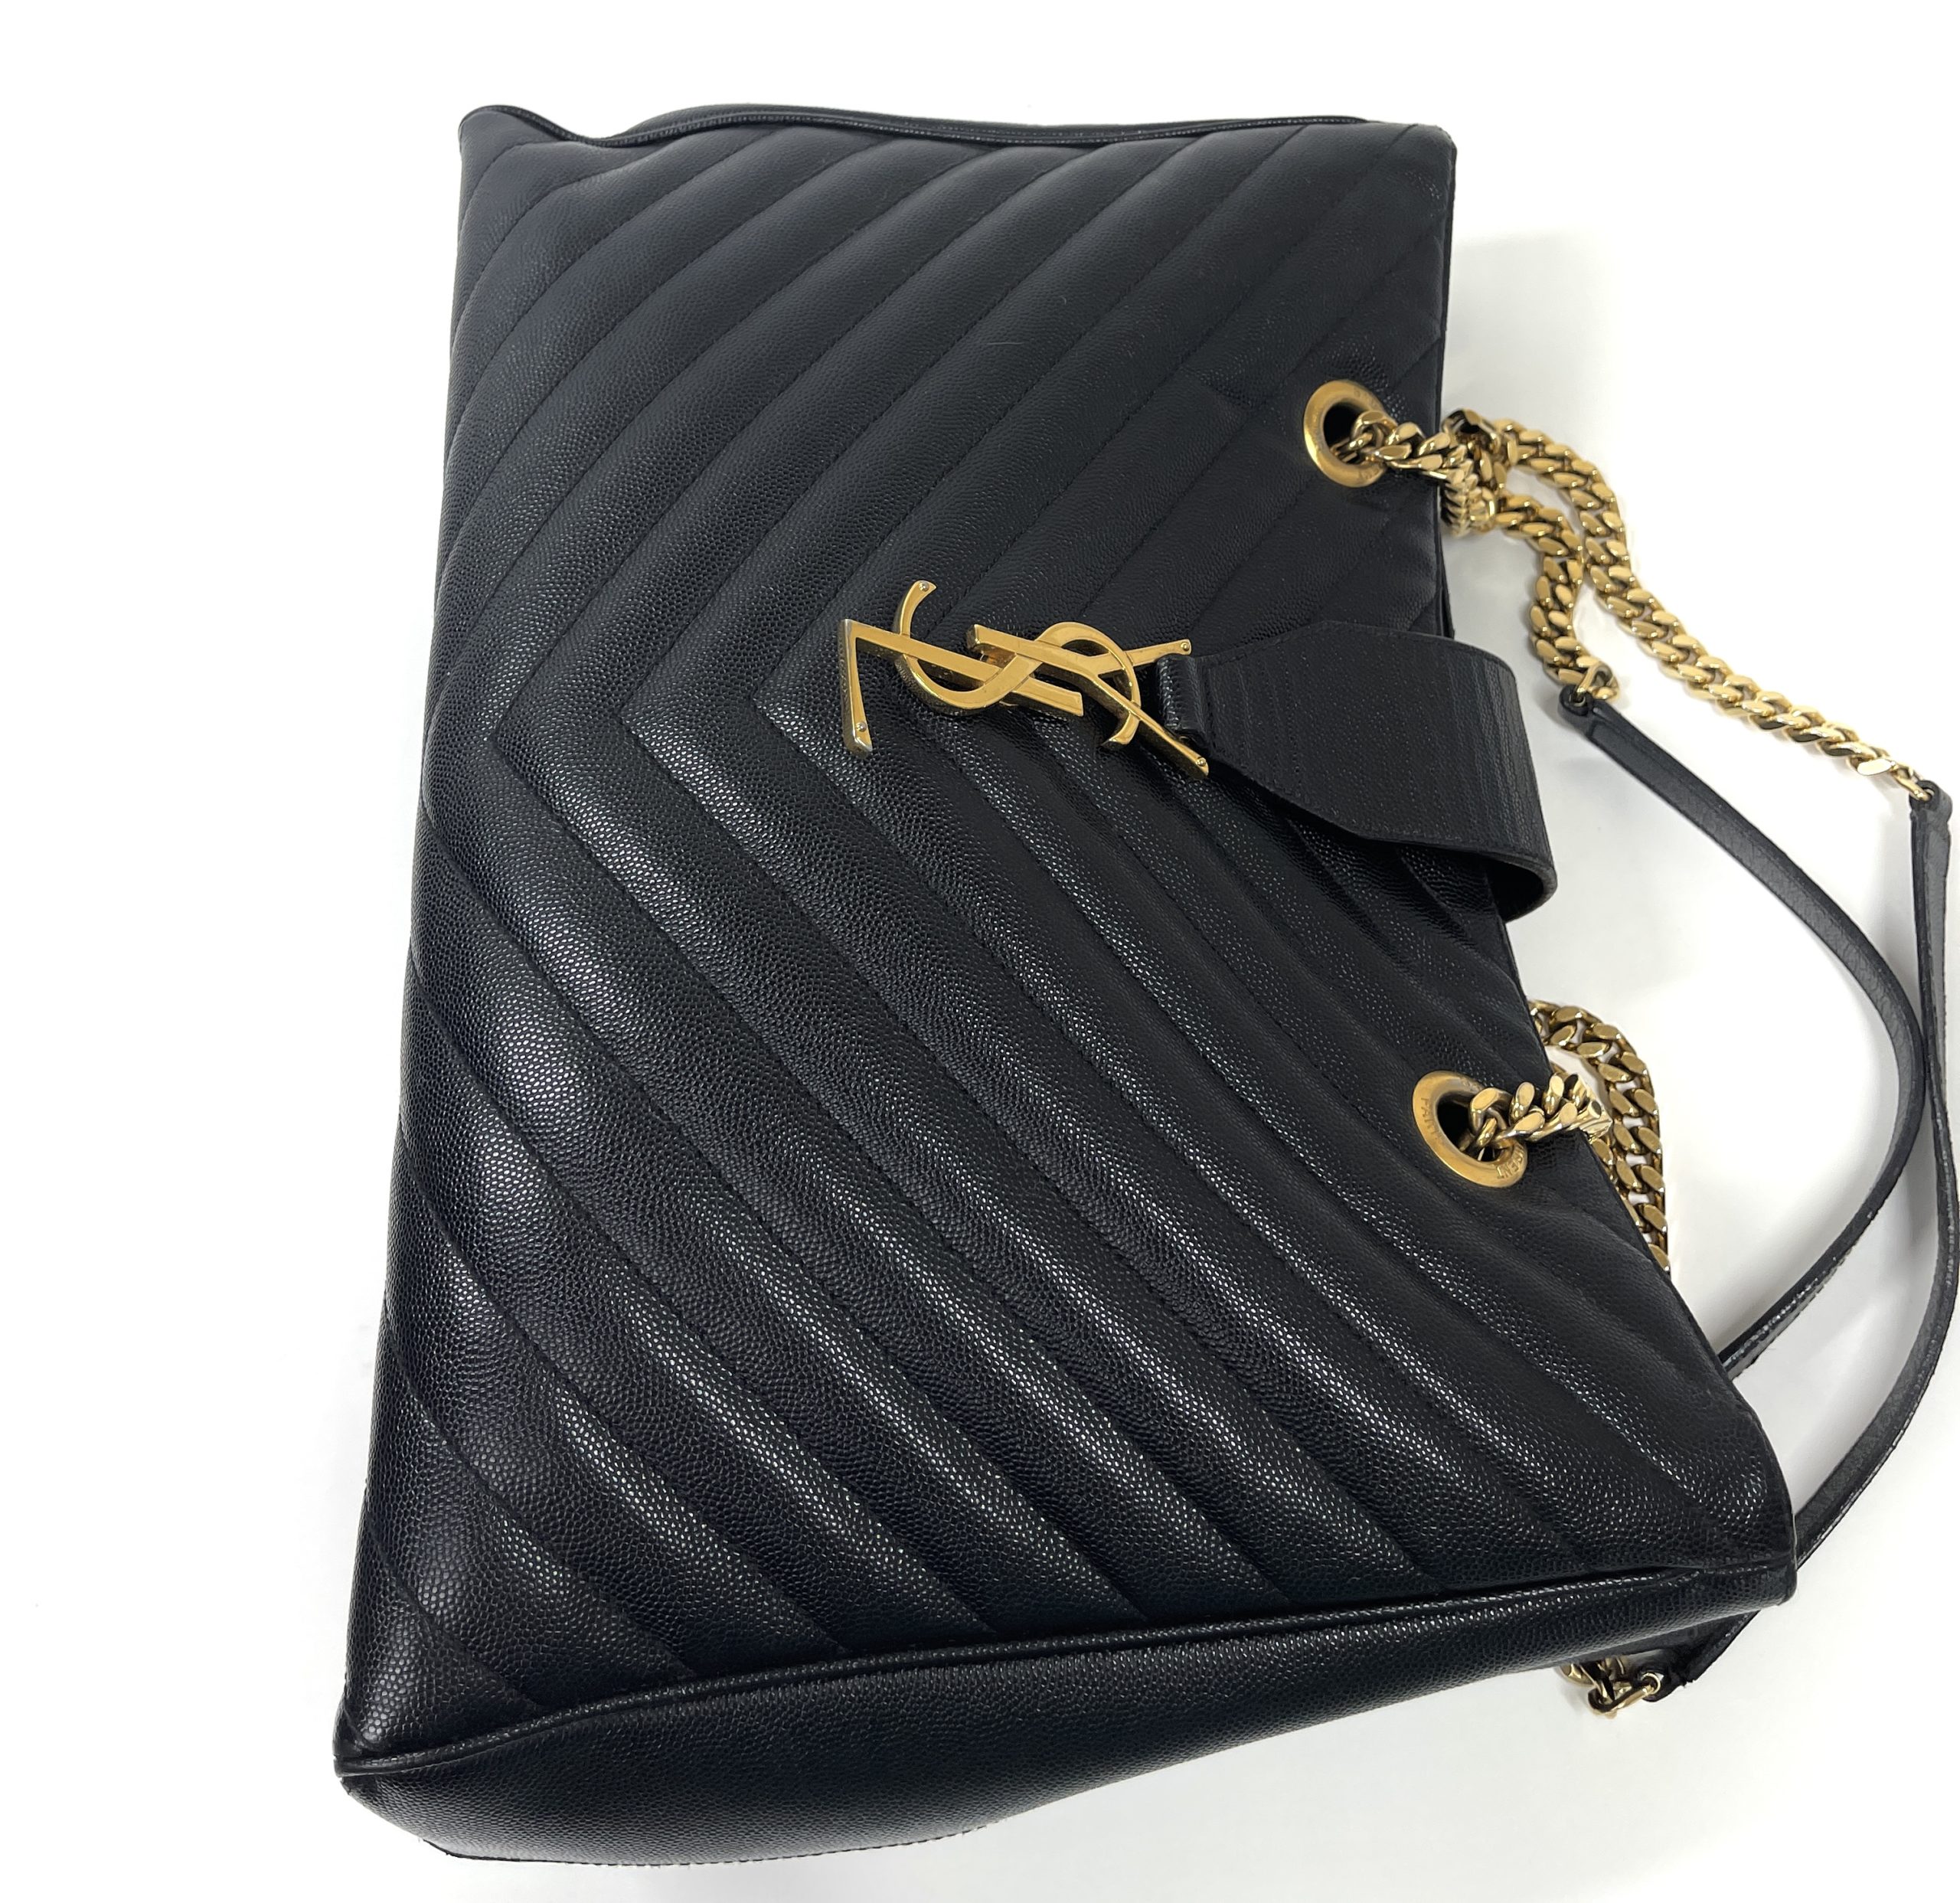 Lou leather handbag Saint Laurent Black in Leather - 40753588